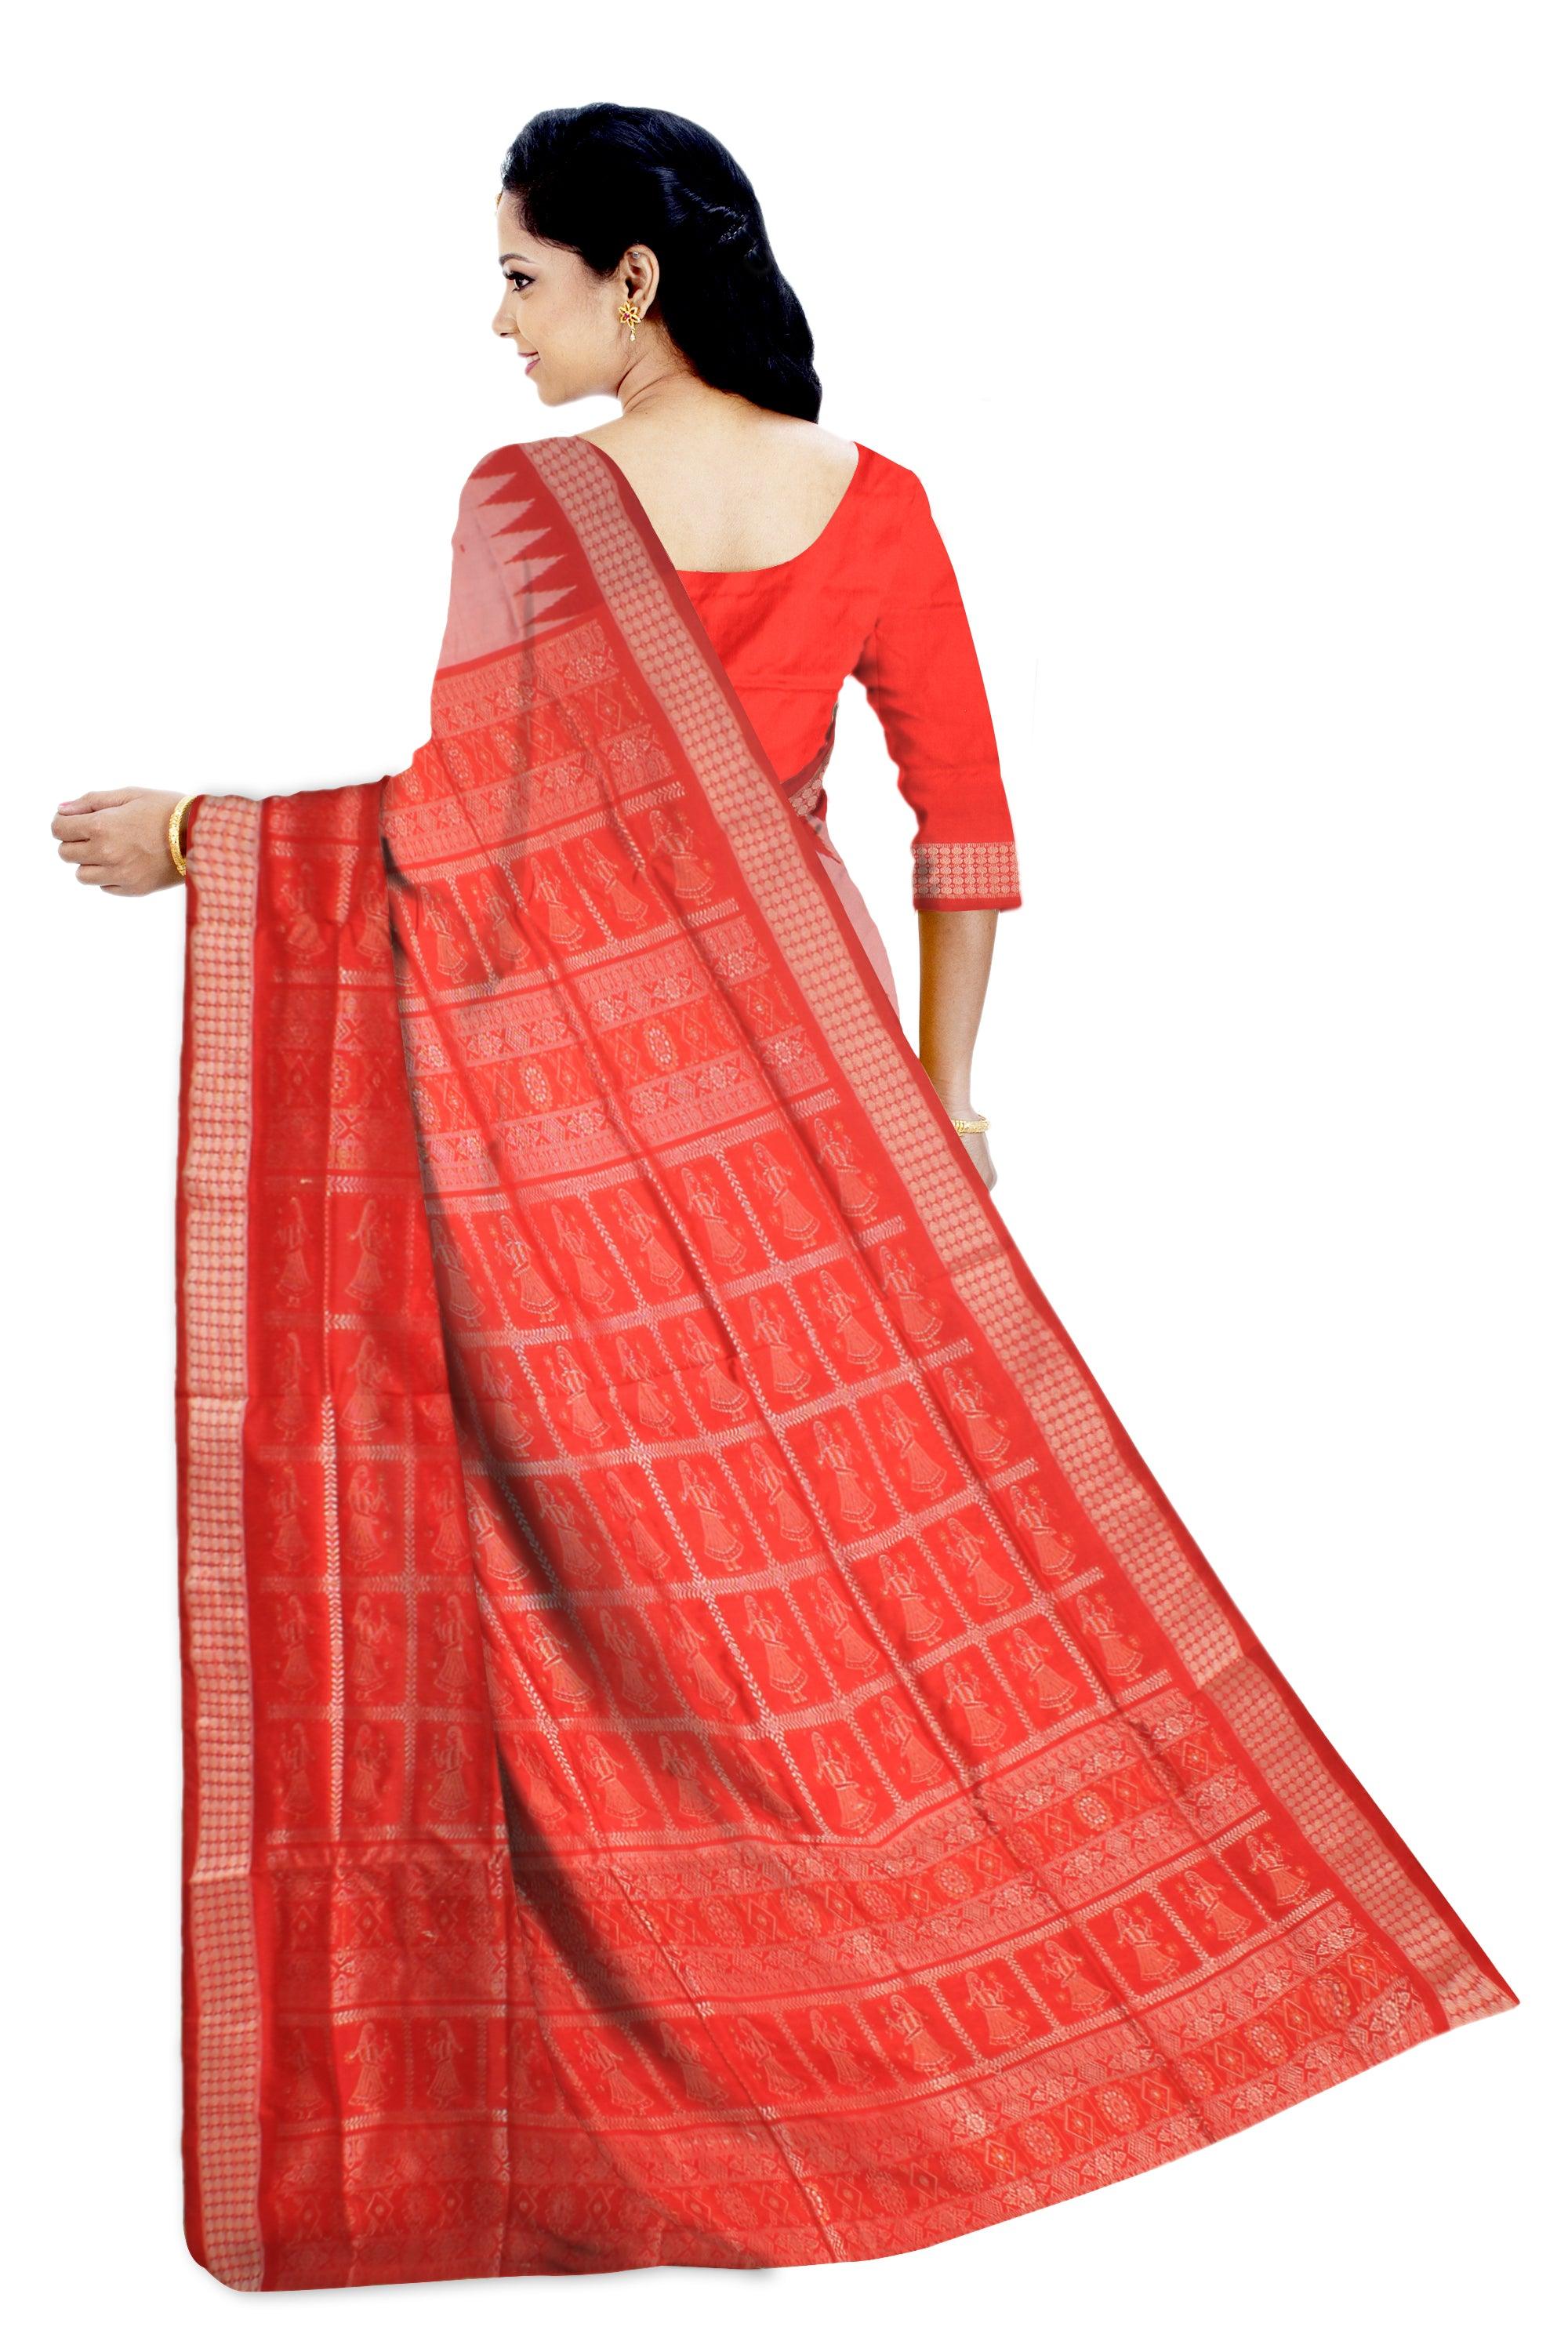 Booty design Sambalpuri  bomkei Pata saree in  Light Orange colour with blouse. - Koshali Arts & Crafts Enterprise